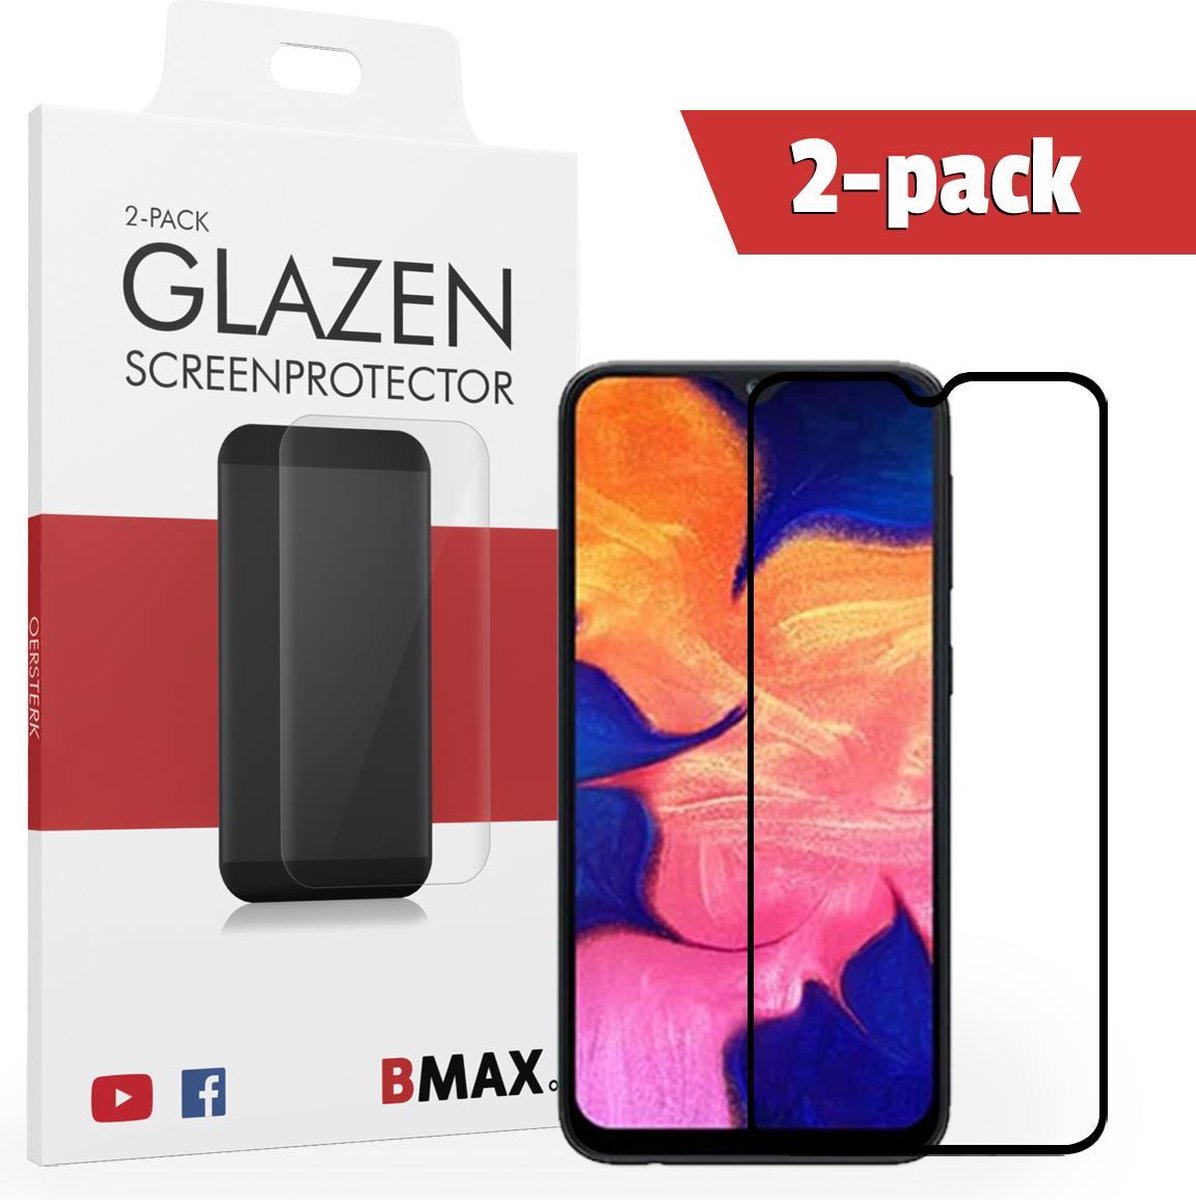 2-pack Bmax Samsung Galaxy A10e Screenprotector - Glass - Full Cover 2.5d - Black